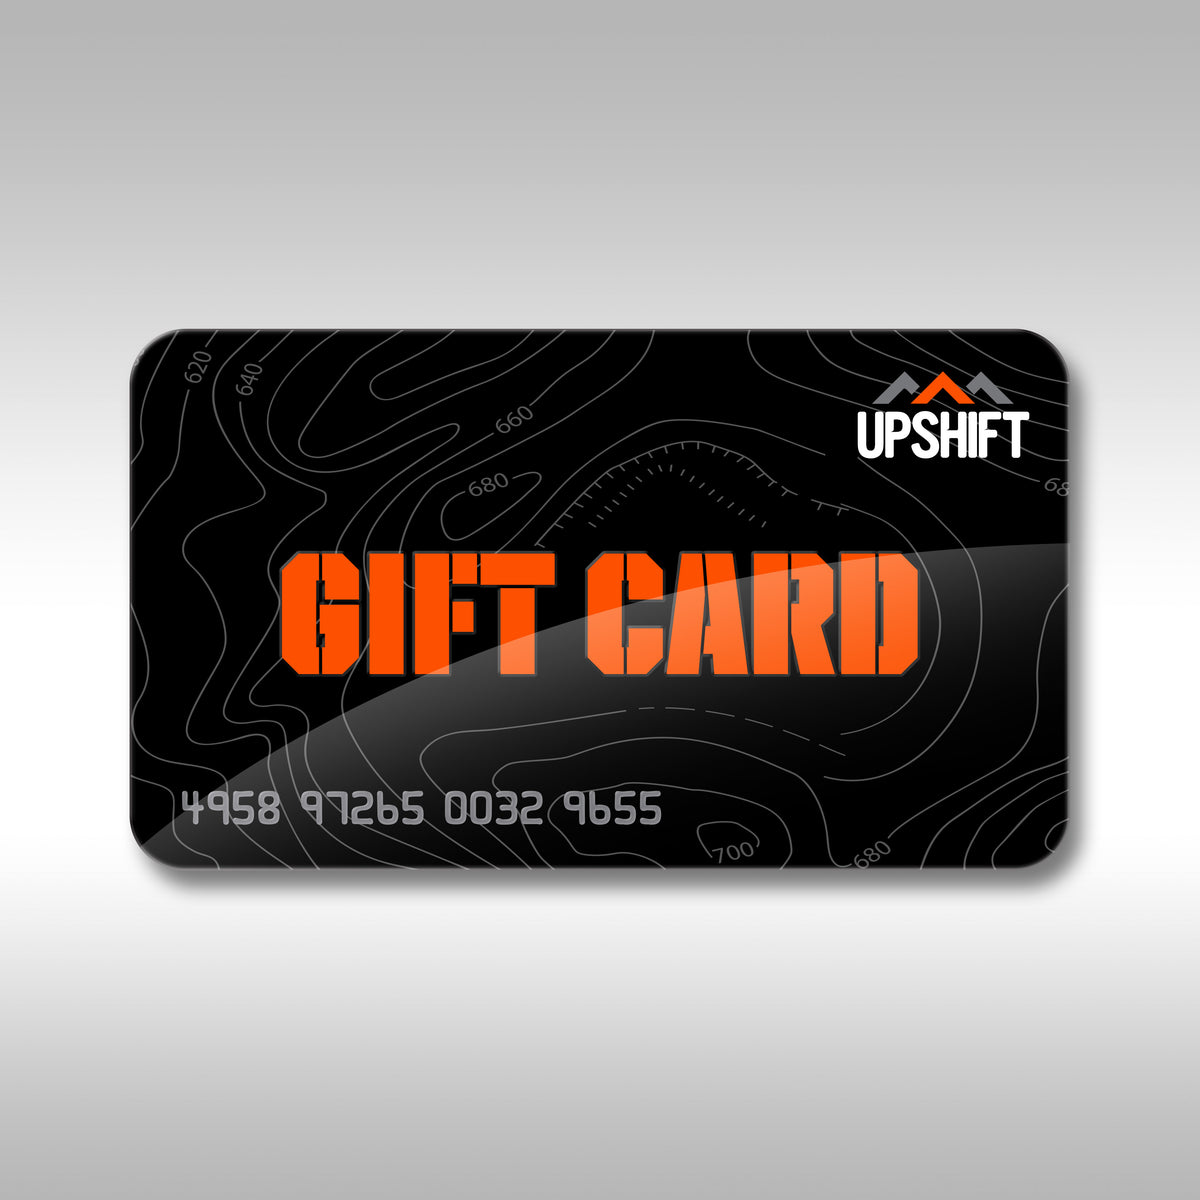 UPSHIFT GIFT CARD - Upshift Online Inc.